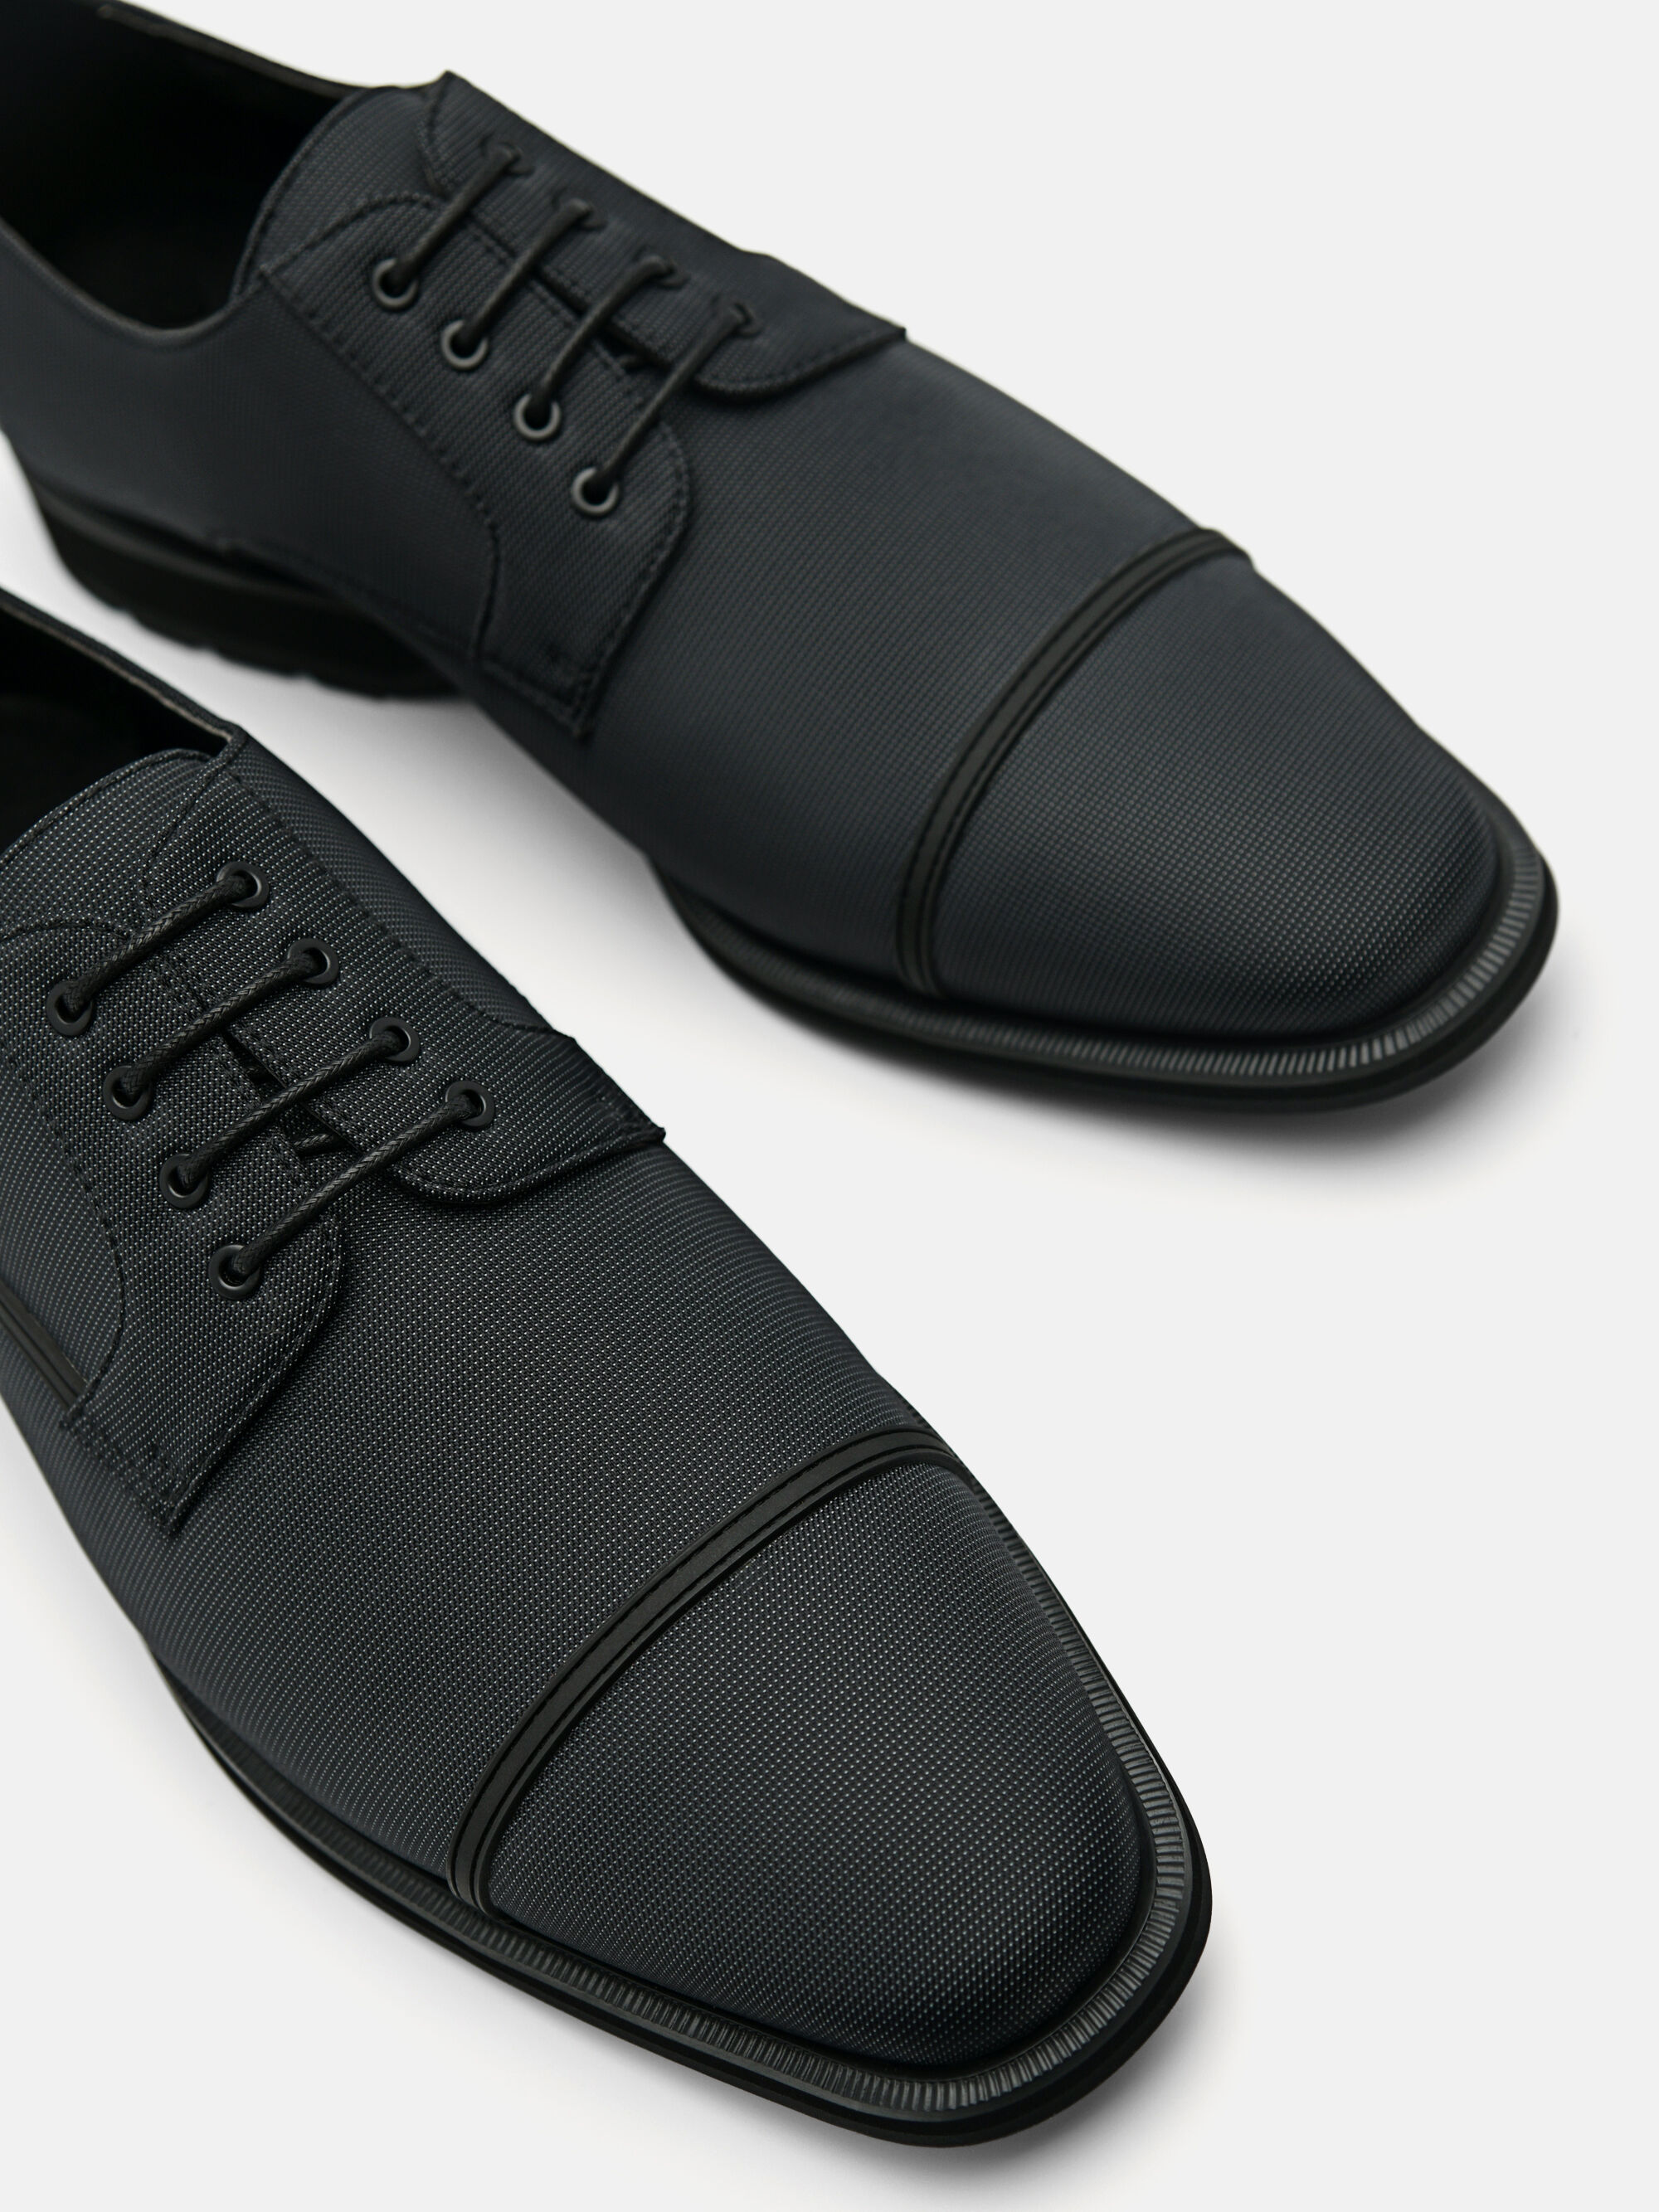 Nylon Derby Shoes, Black